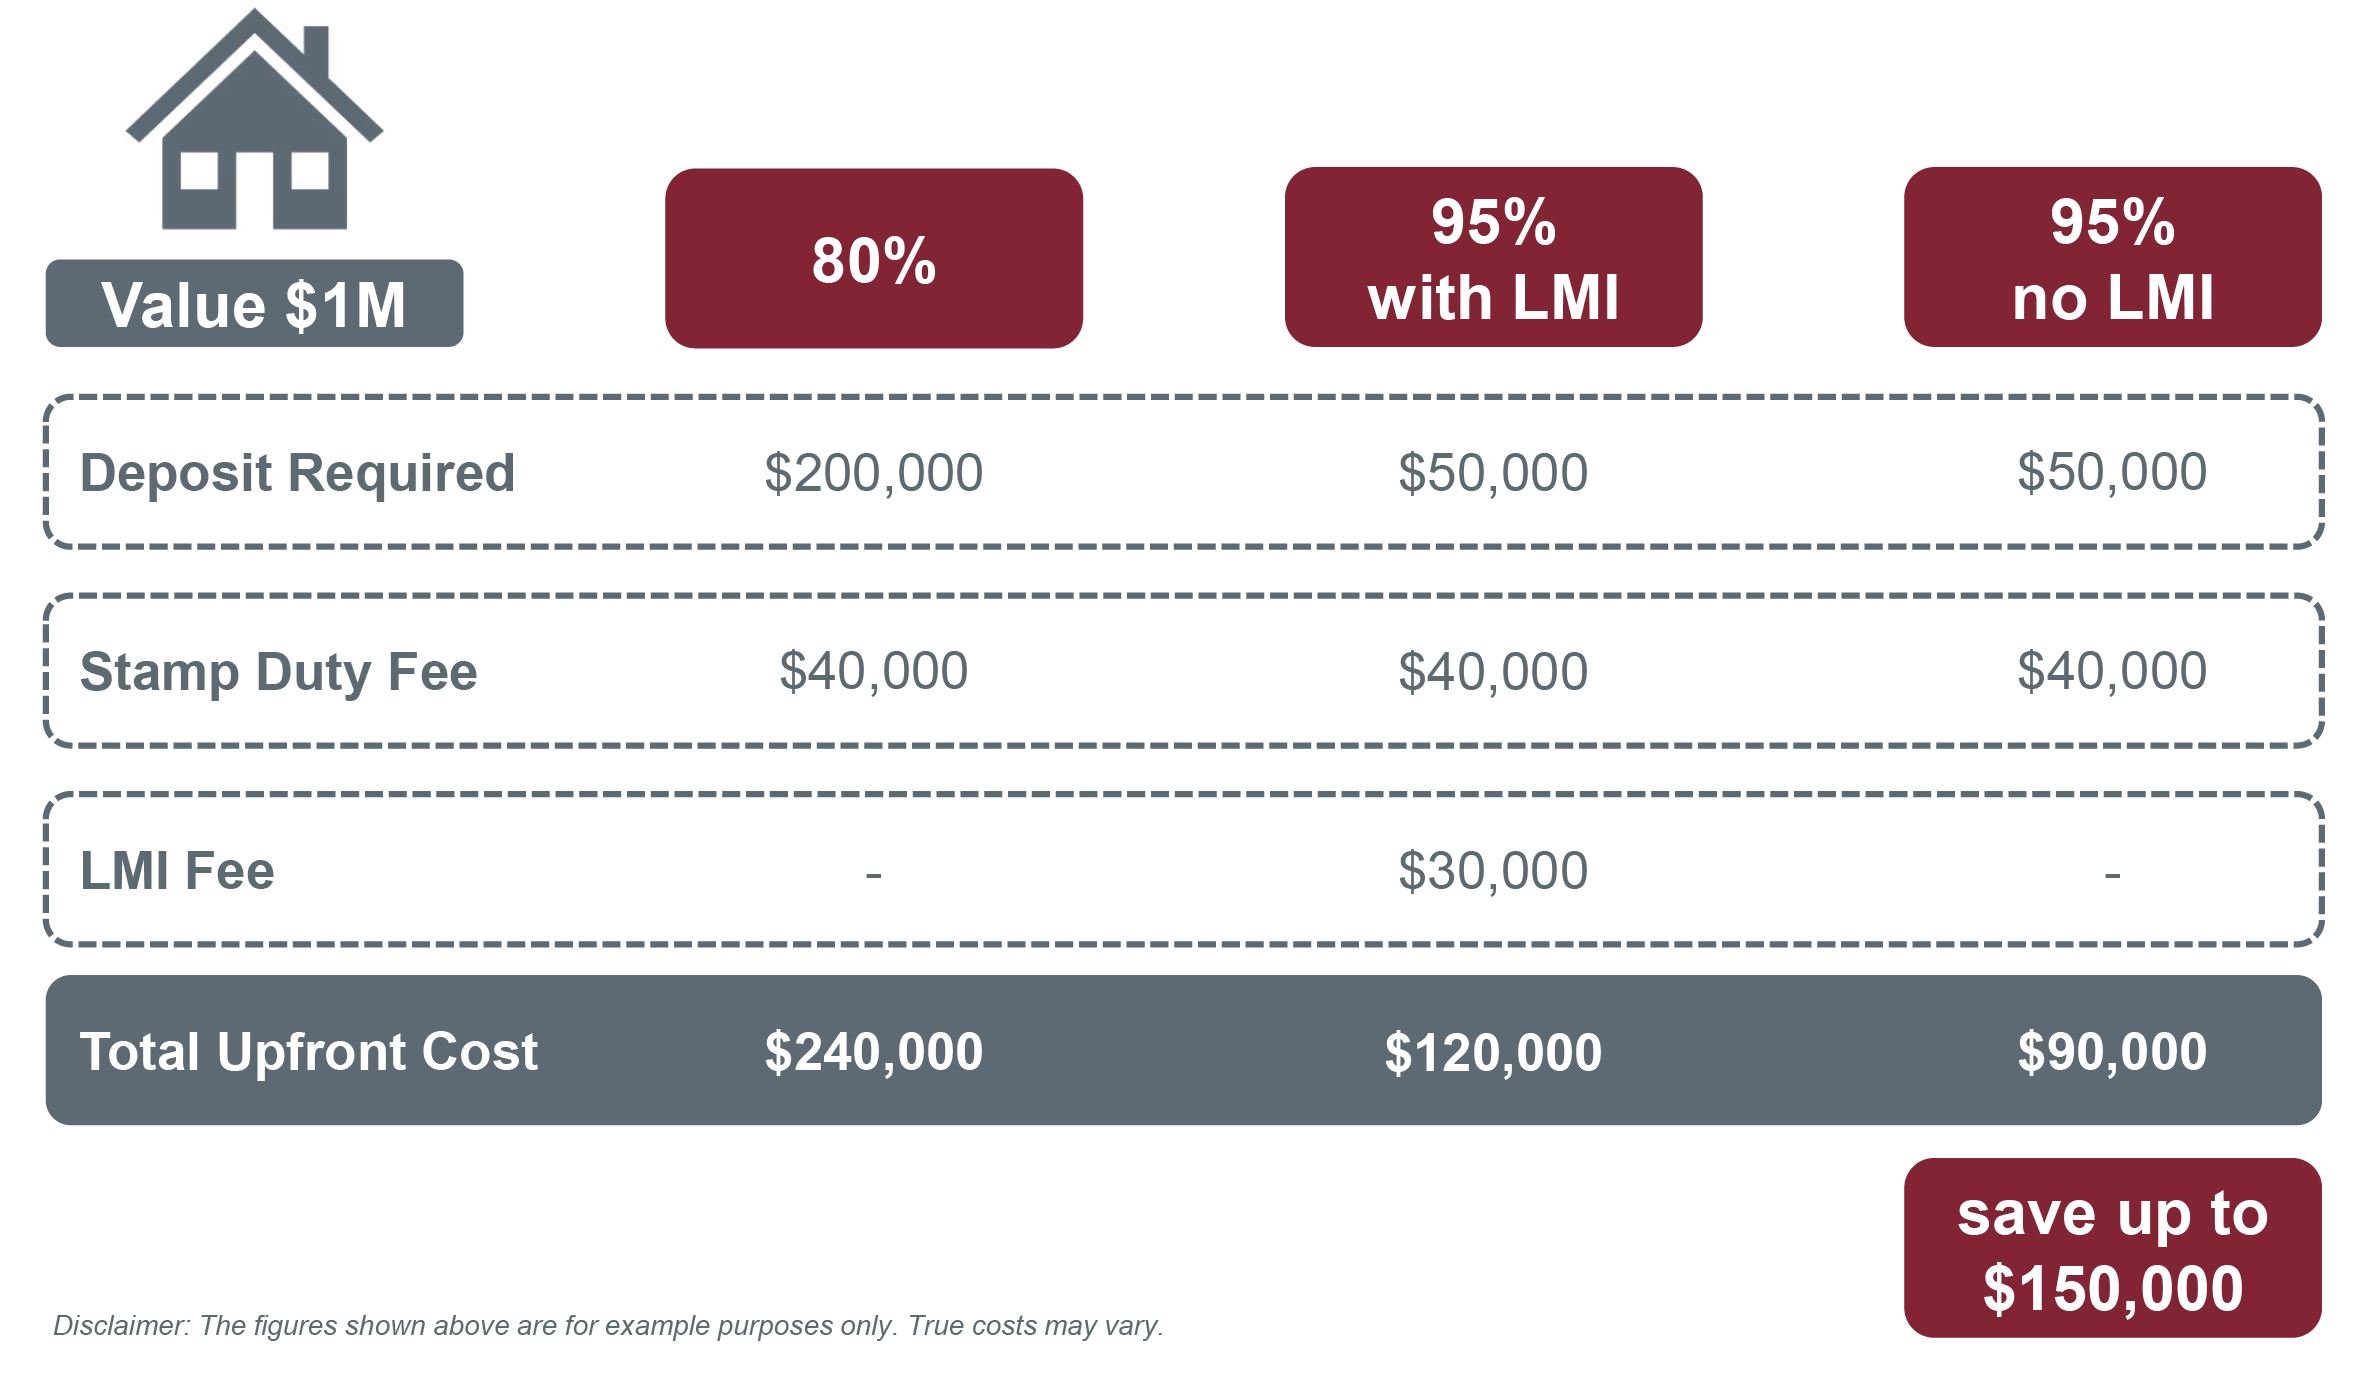 Mortgage Fees with LMI vs no LMI